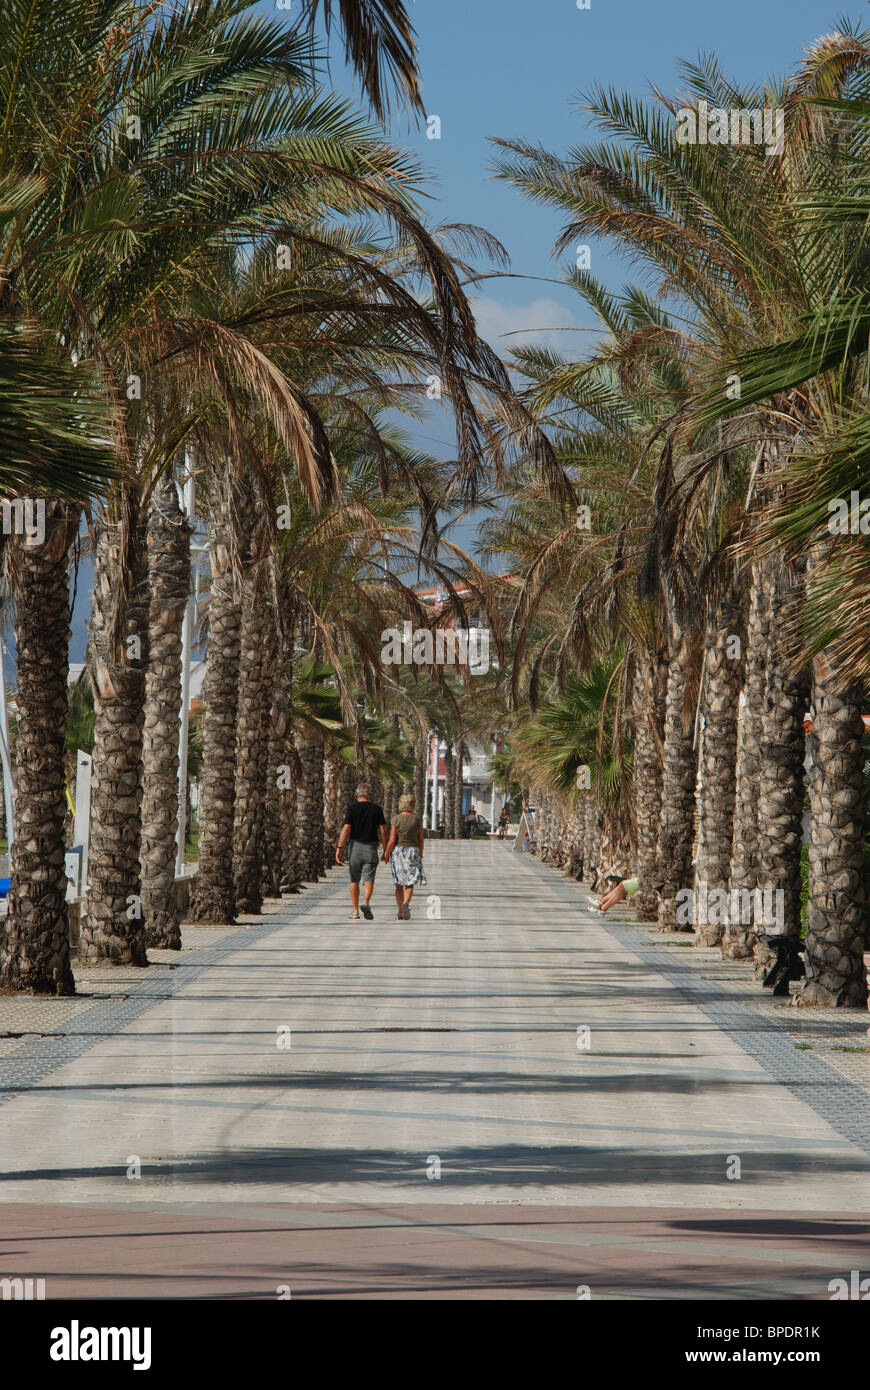 Promenade lined with palm trees, Lagos, Algarrobo Costa, Costa del Sol, Malaga Province, Andalucia, Spain, Western Europe. Stock Photo